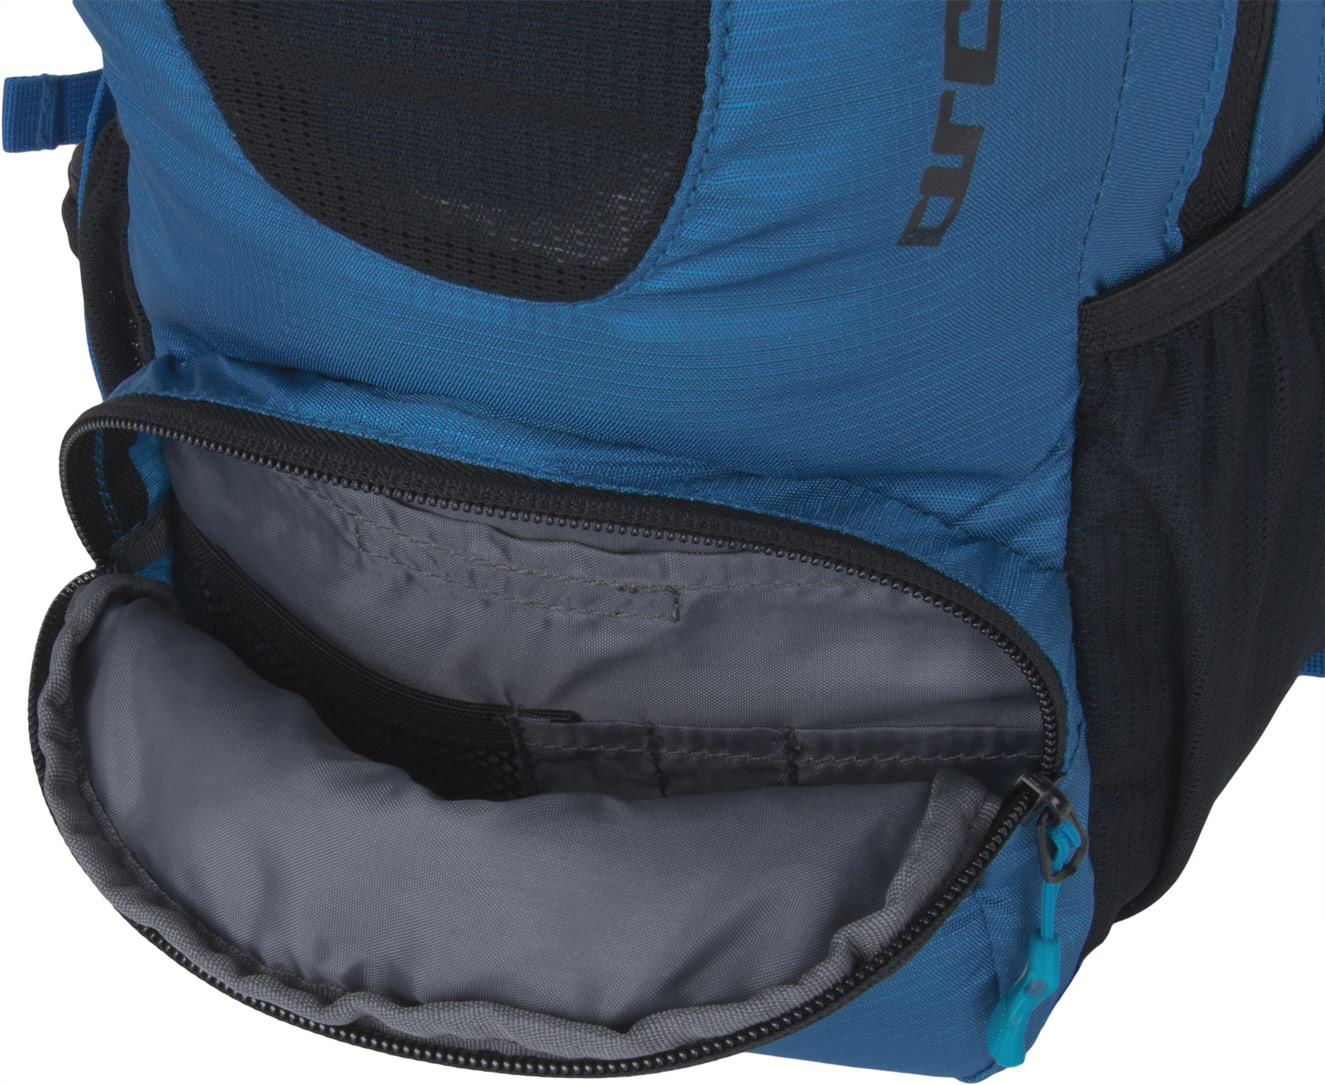 Lightweight hiking backpack